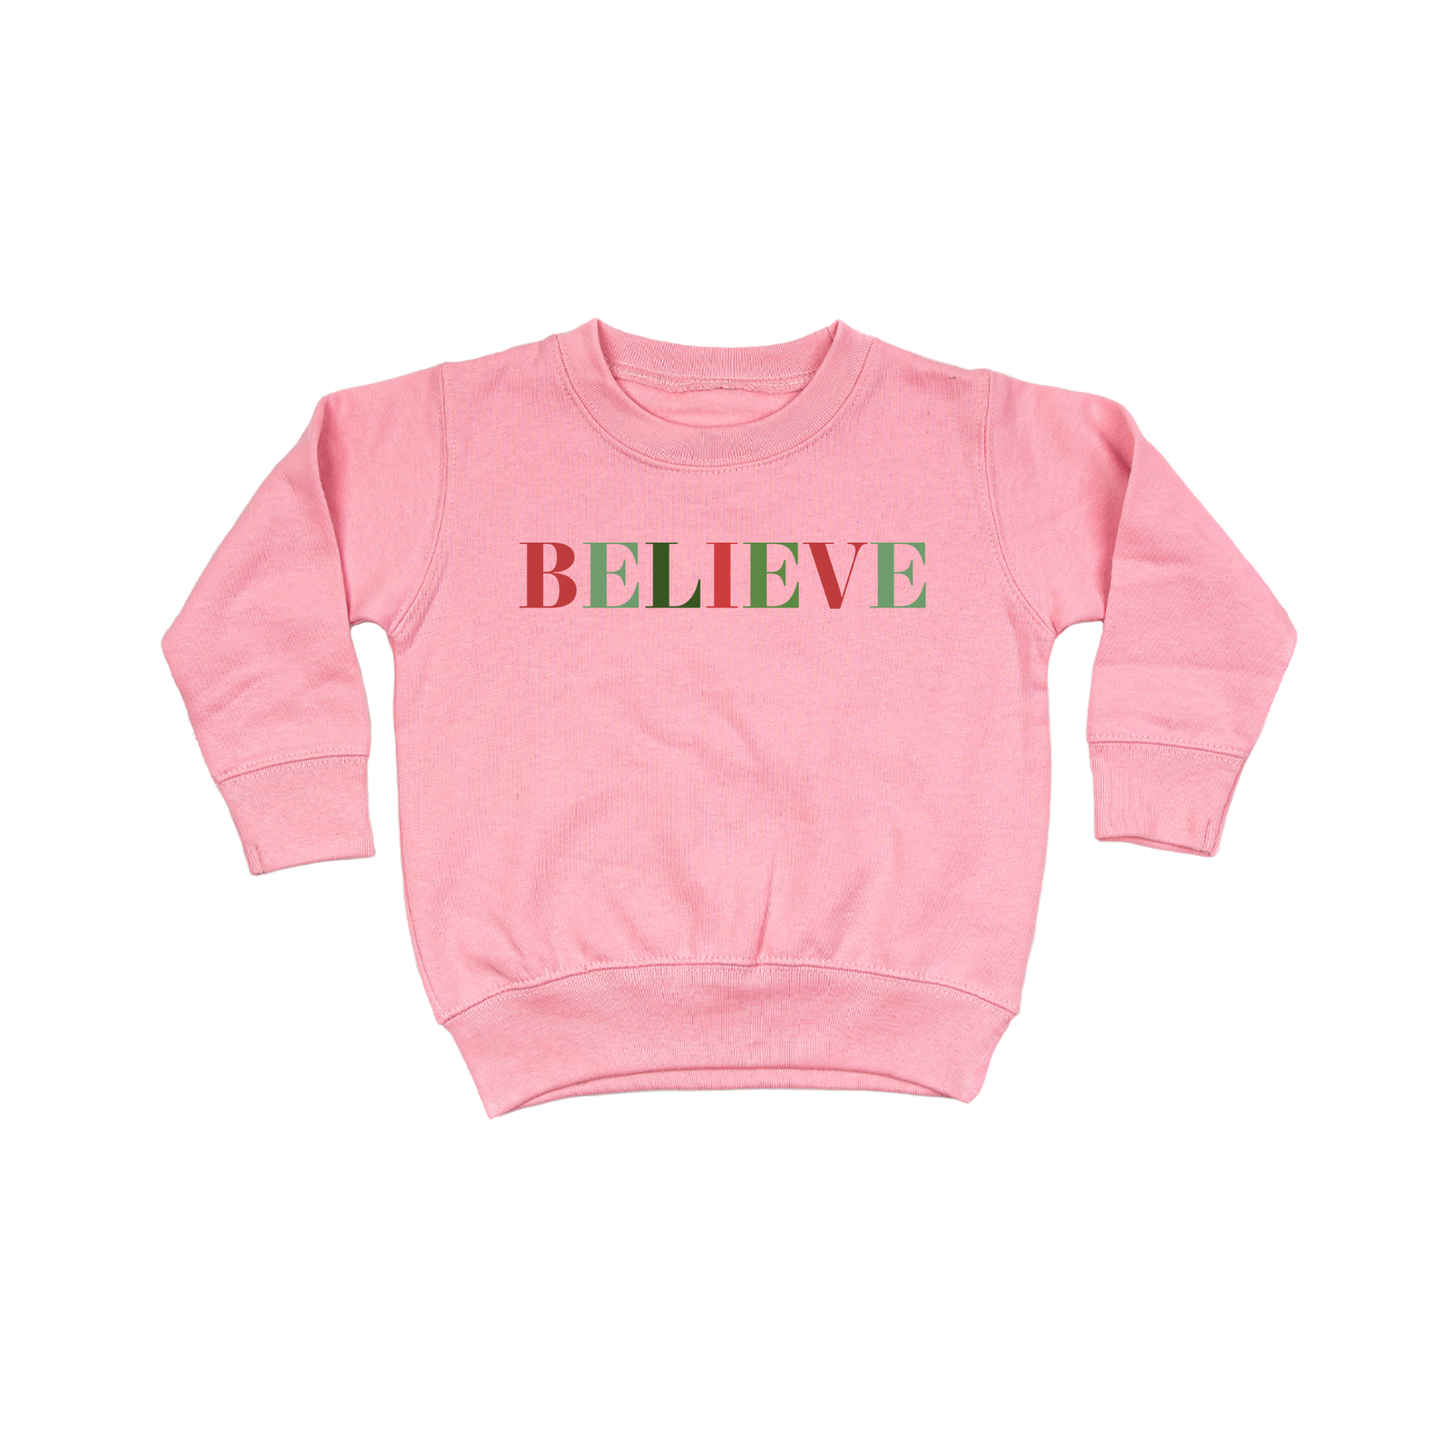 BELIEVE (Multi Color) - Kids Sweatshirt (Pink)